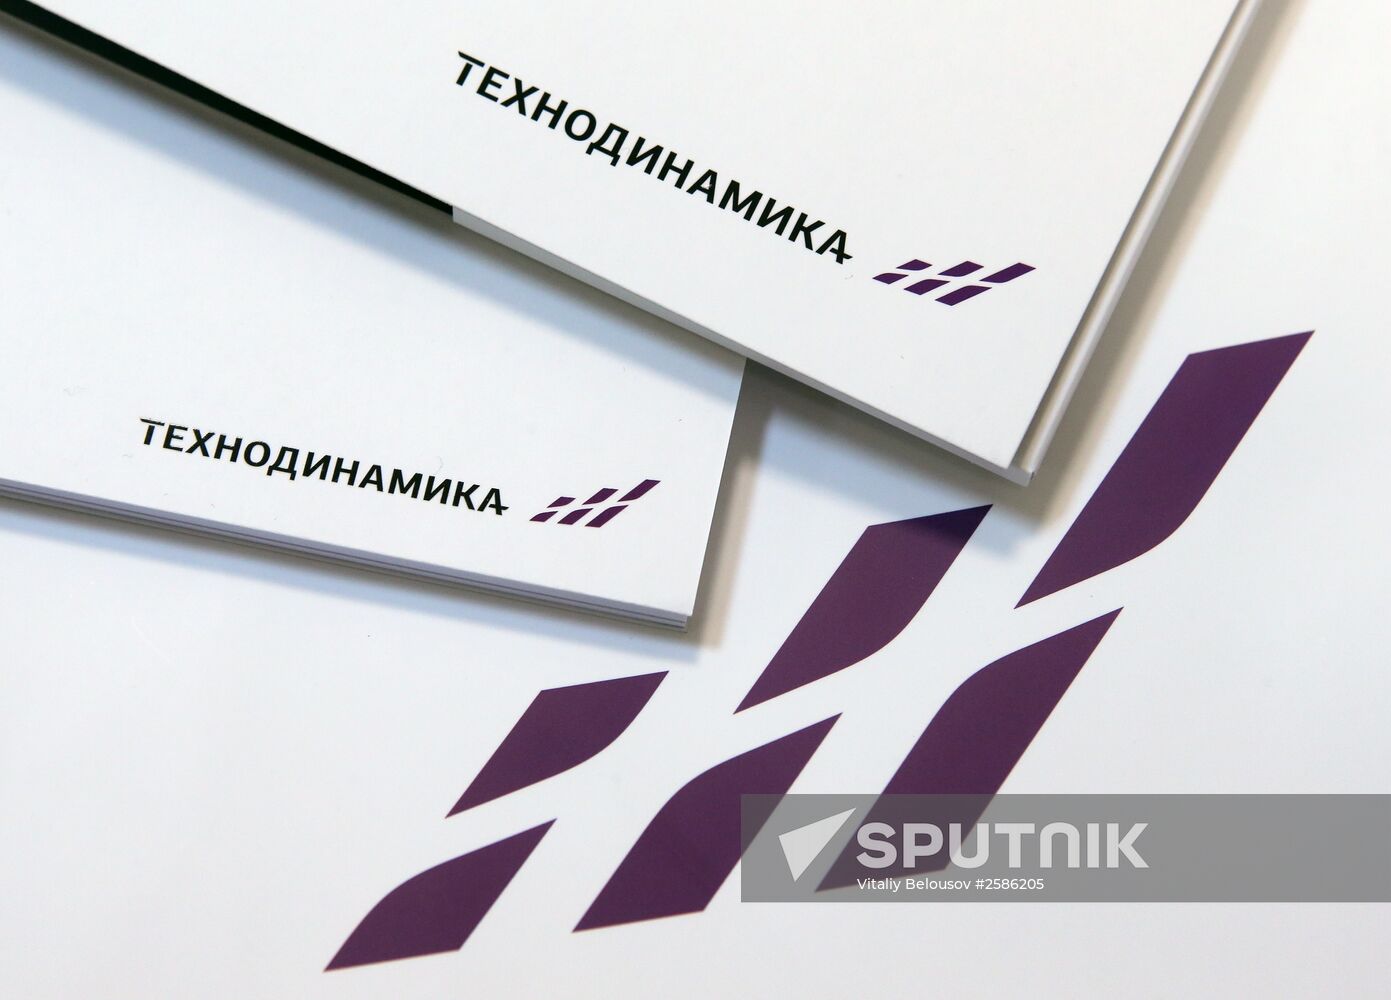 Aviation Equipment Holding presents new Technodynamics brand